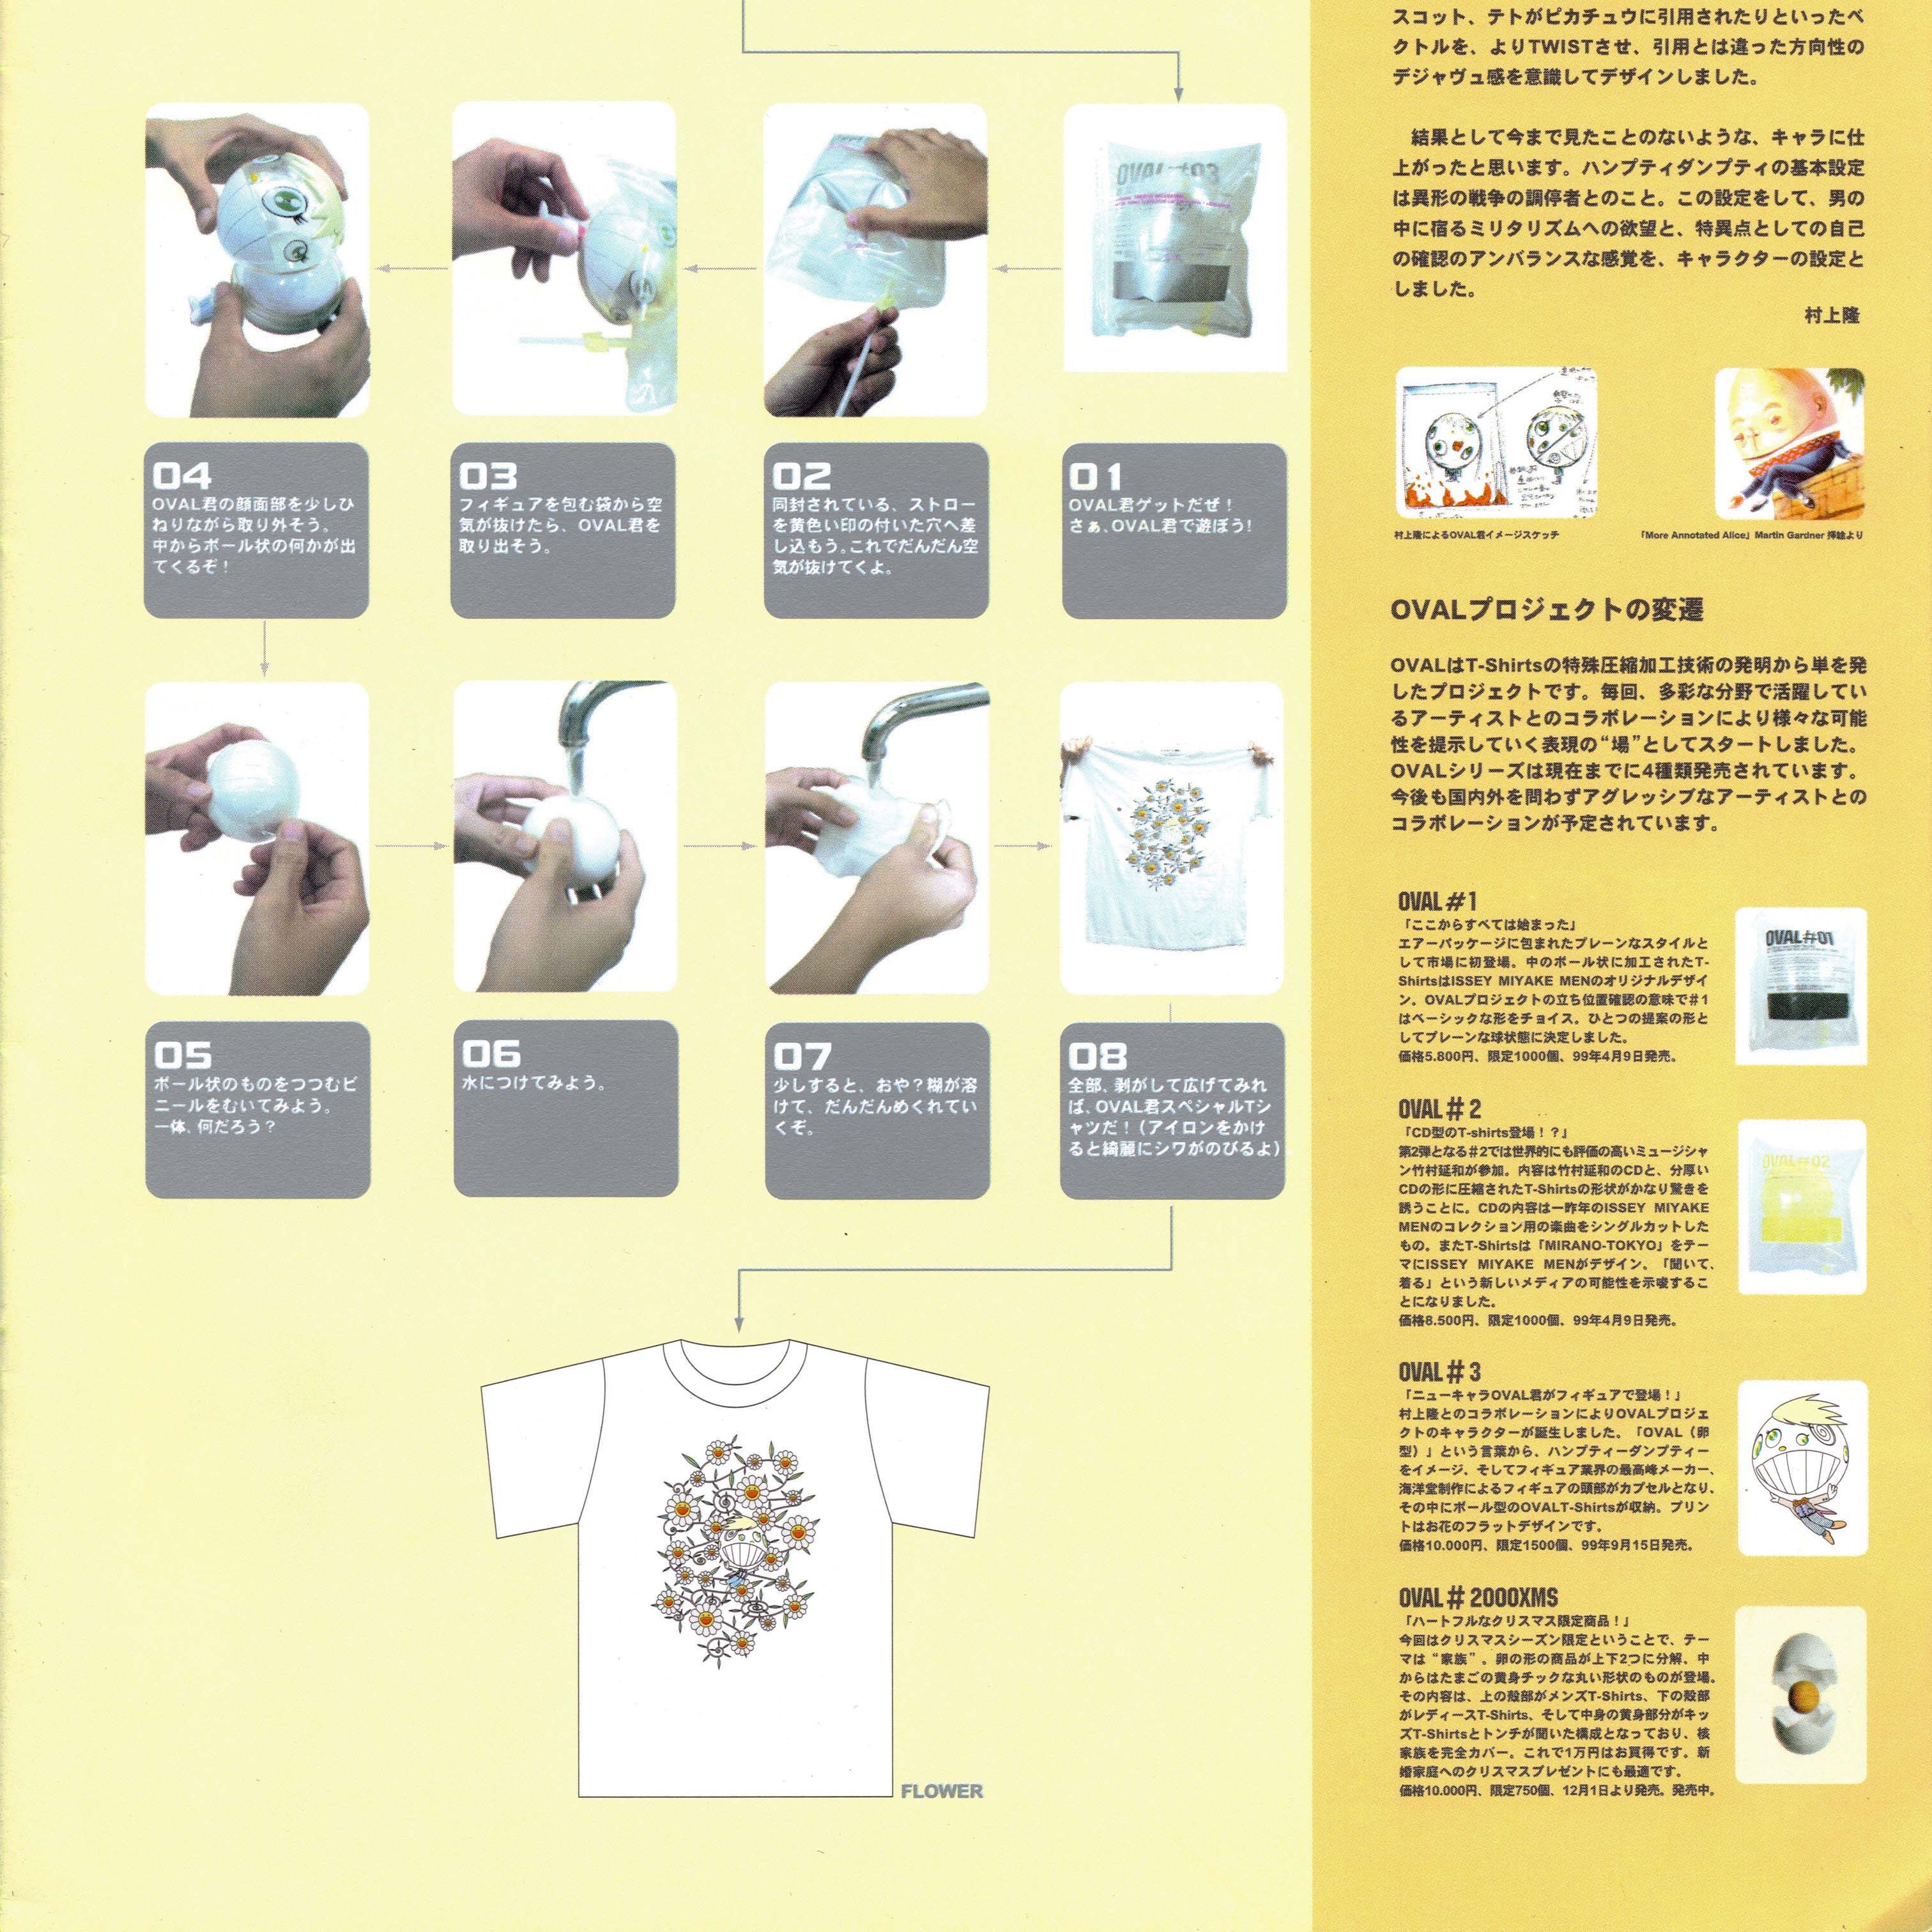 Issey Miyake - SS99 OVAL #2: Shrunk Cotton T-Shirt Feat. Nobukazu Takemura - 7